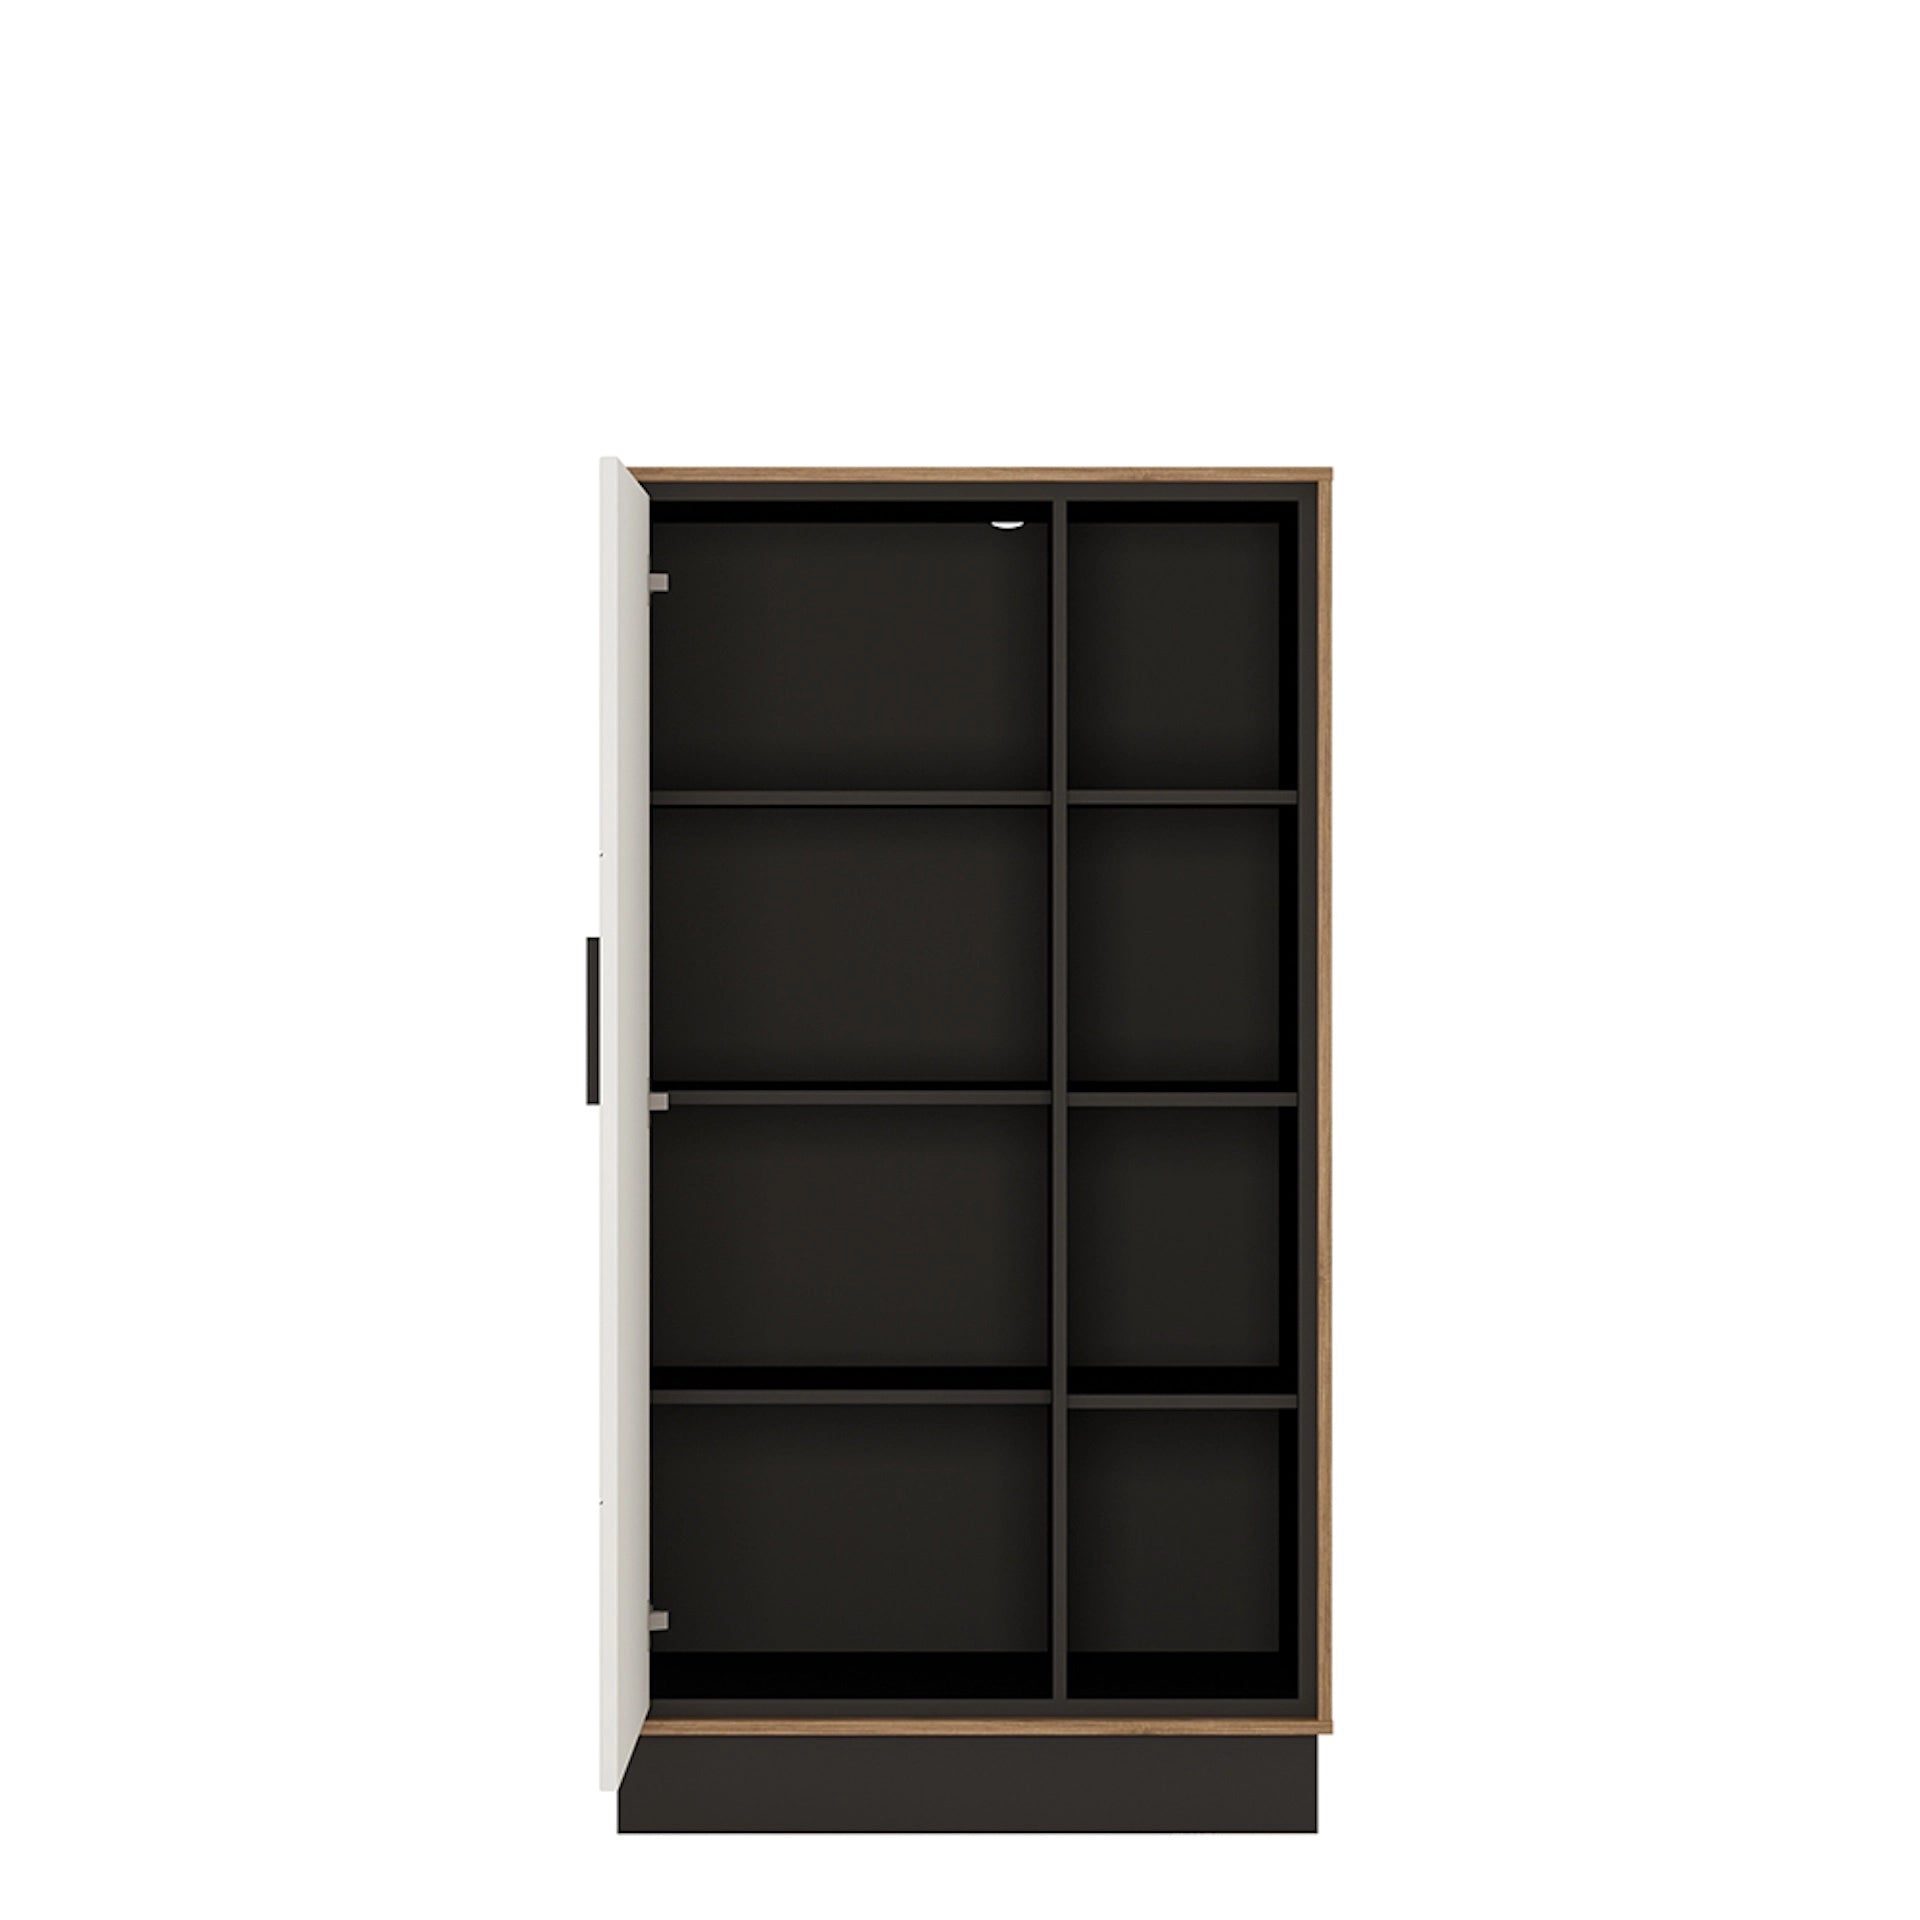 Furniture To Go Brolo Wide 1 Door Bookcase in Walnut & White